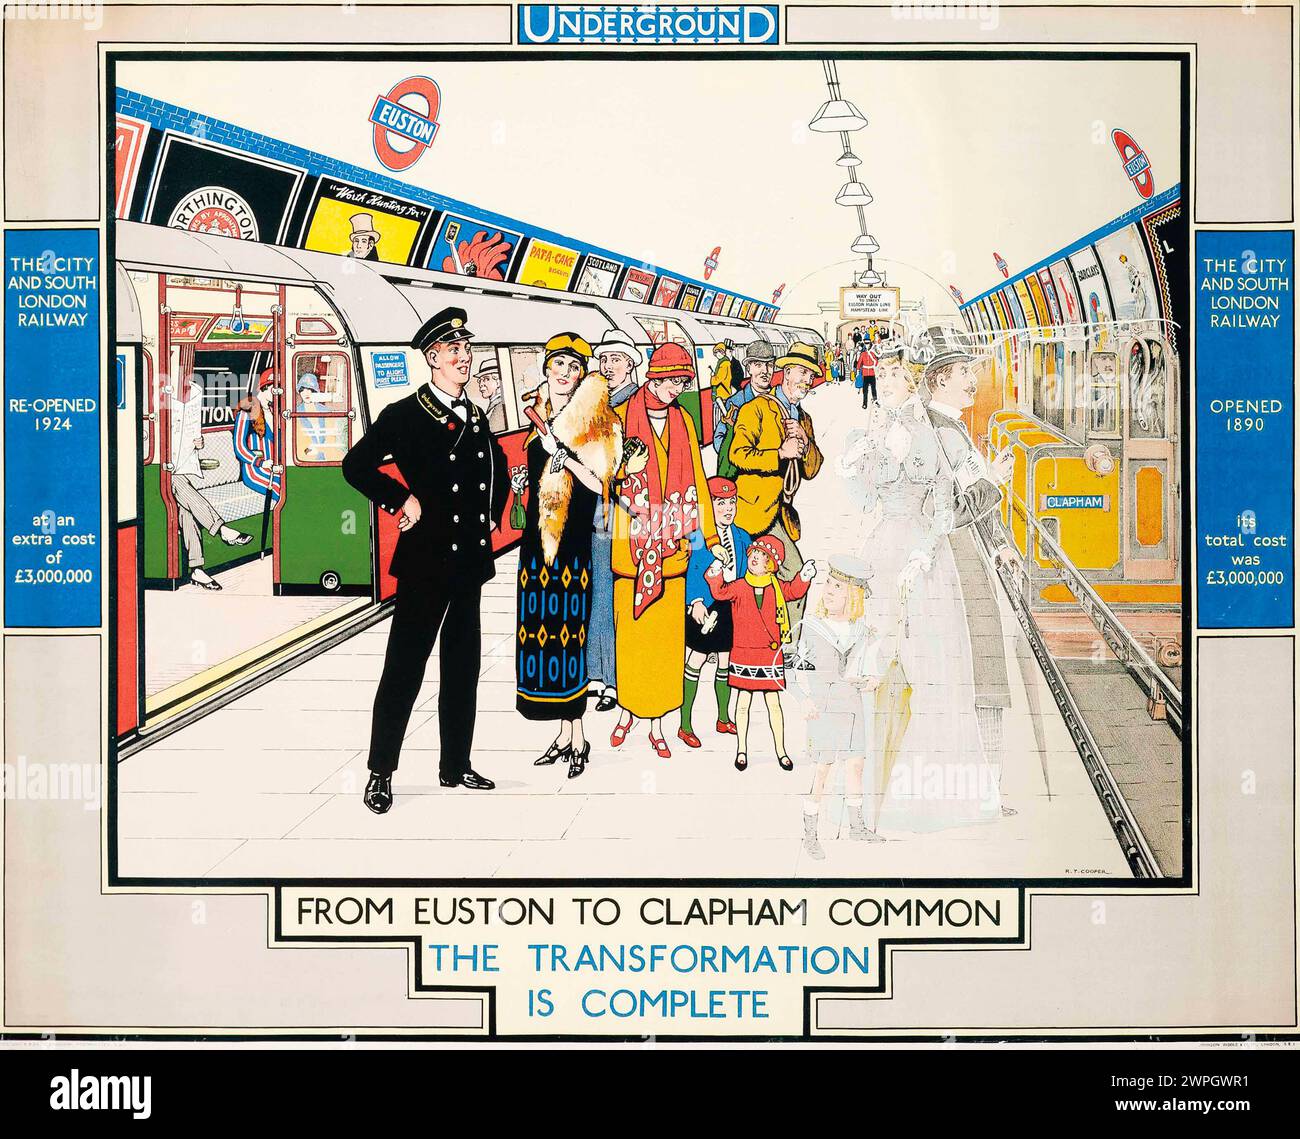 London underground tube advertising poster 1920s hi-res stock